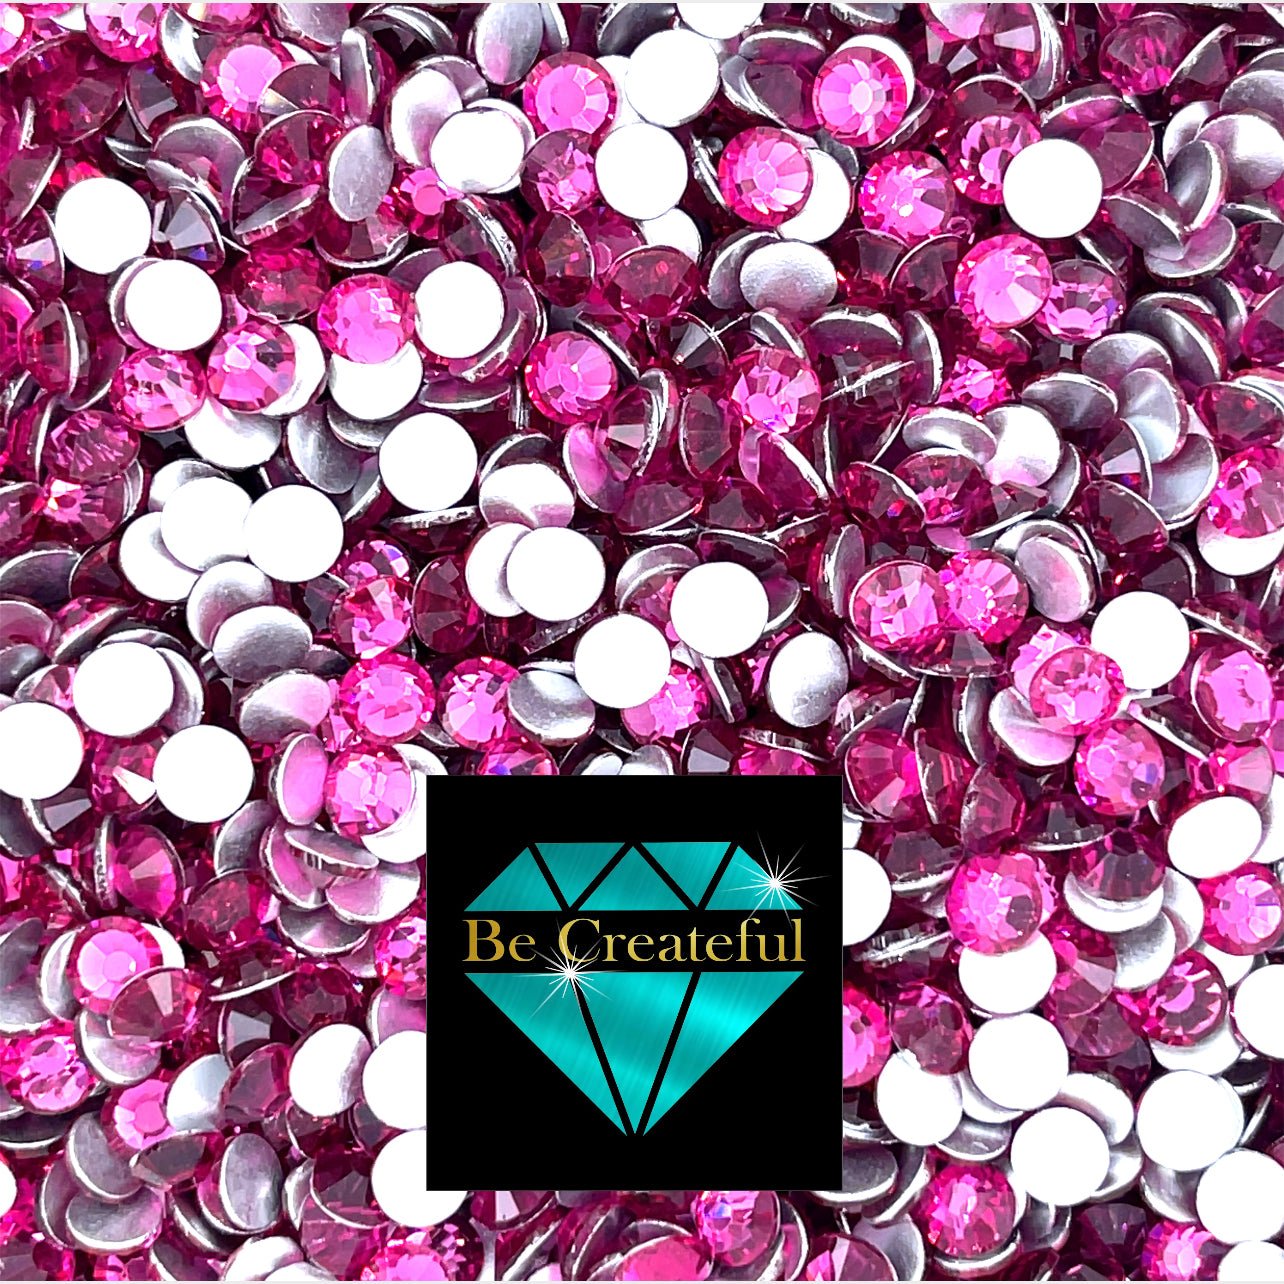 BULK Flatback Foil Fuchsia/Hot Pink Glass Rhinestones - Be Createful, Beautiful Rhinestones at wholesale prices.